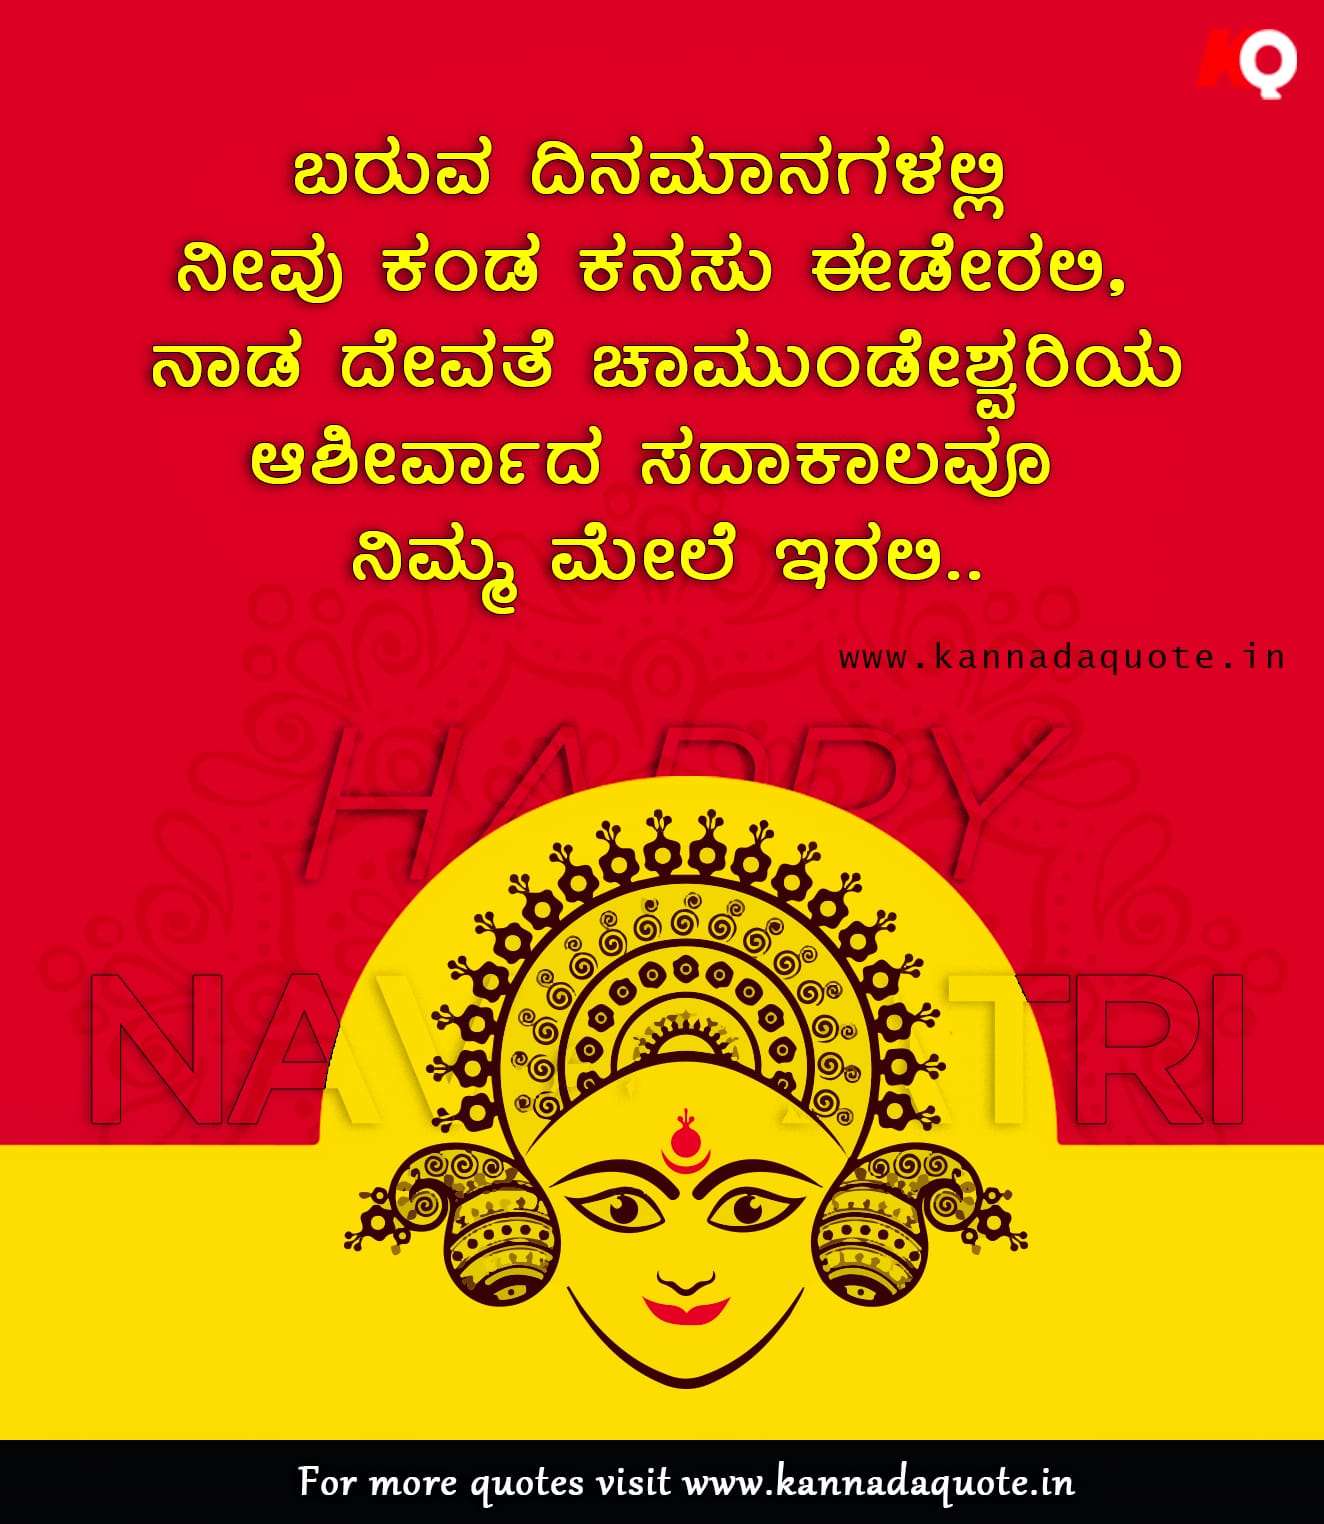 Dasara habbada shubhashayagalu Kannada wishes